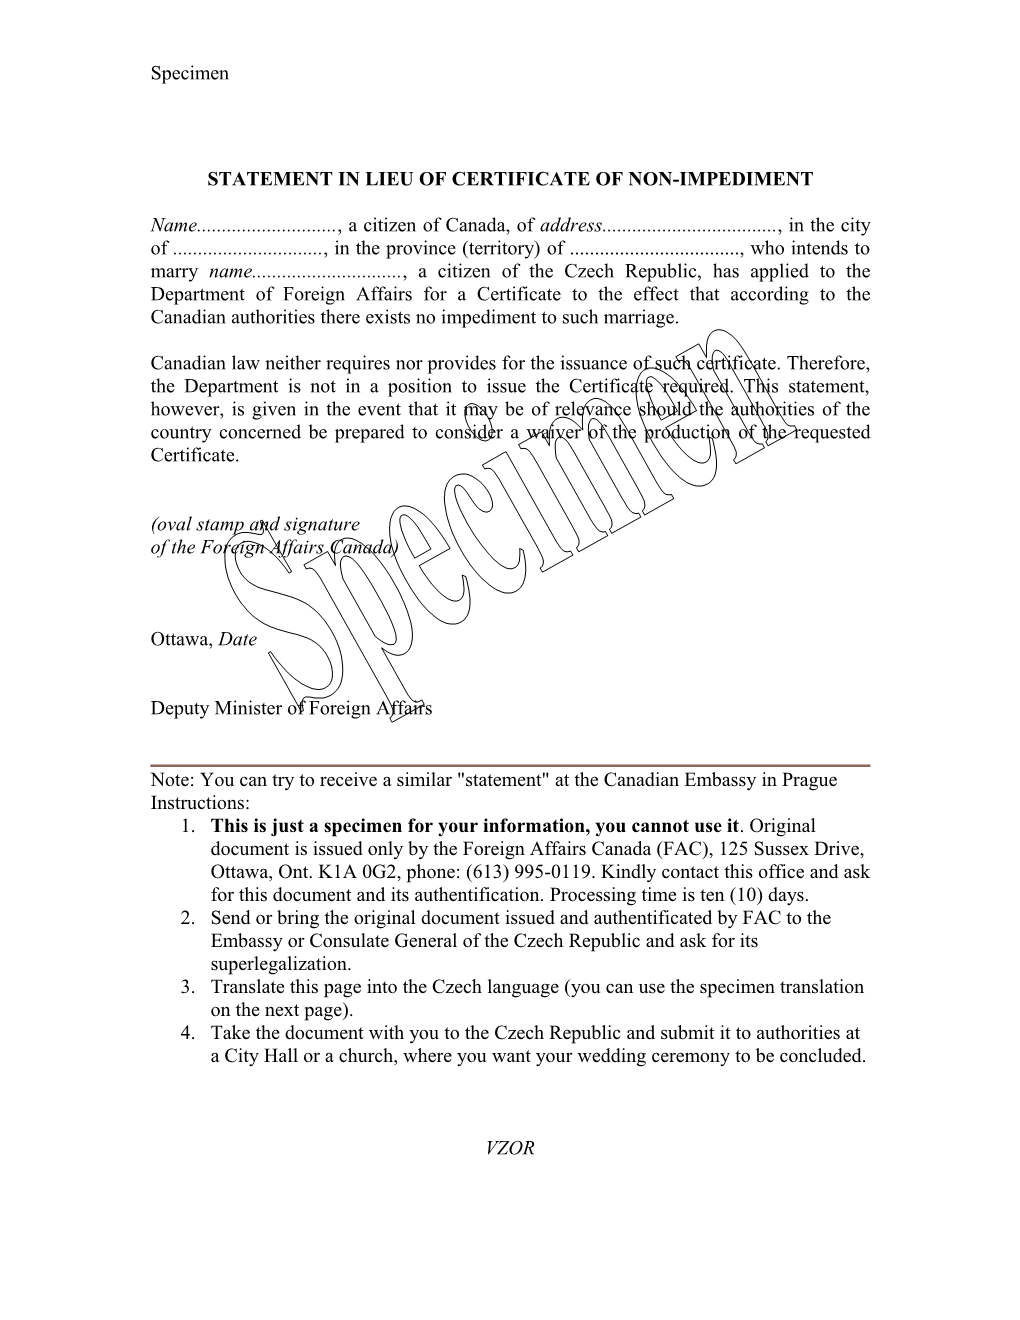 Statement in Lieu of Certificate of Non-Impediment